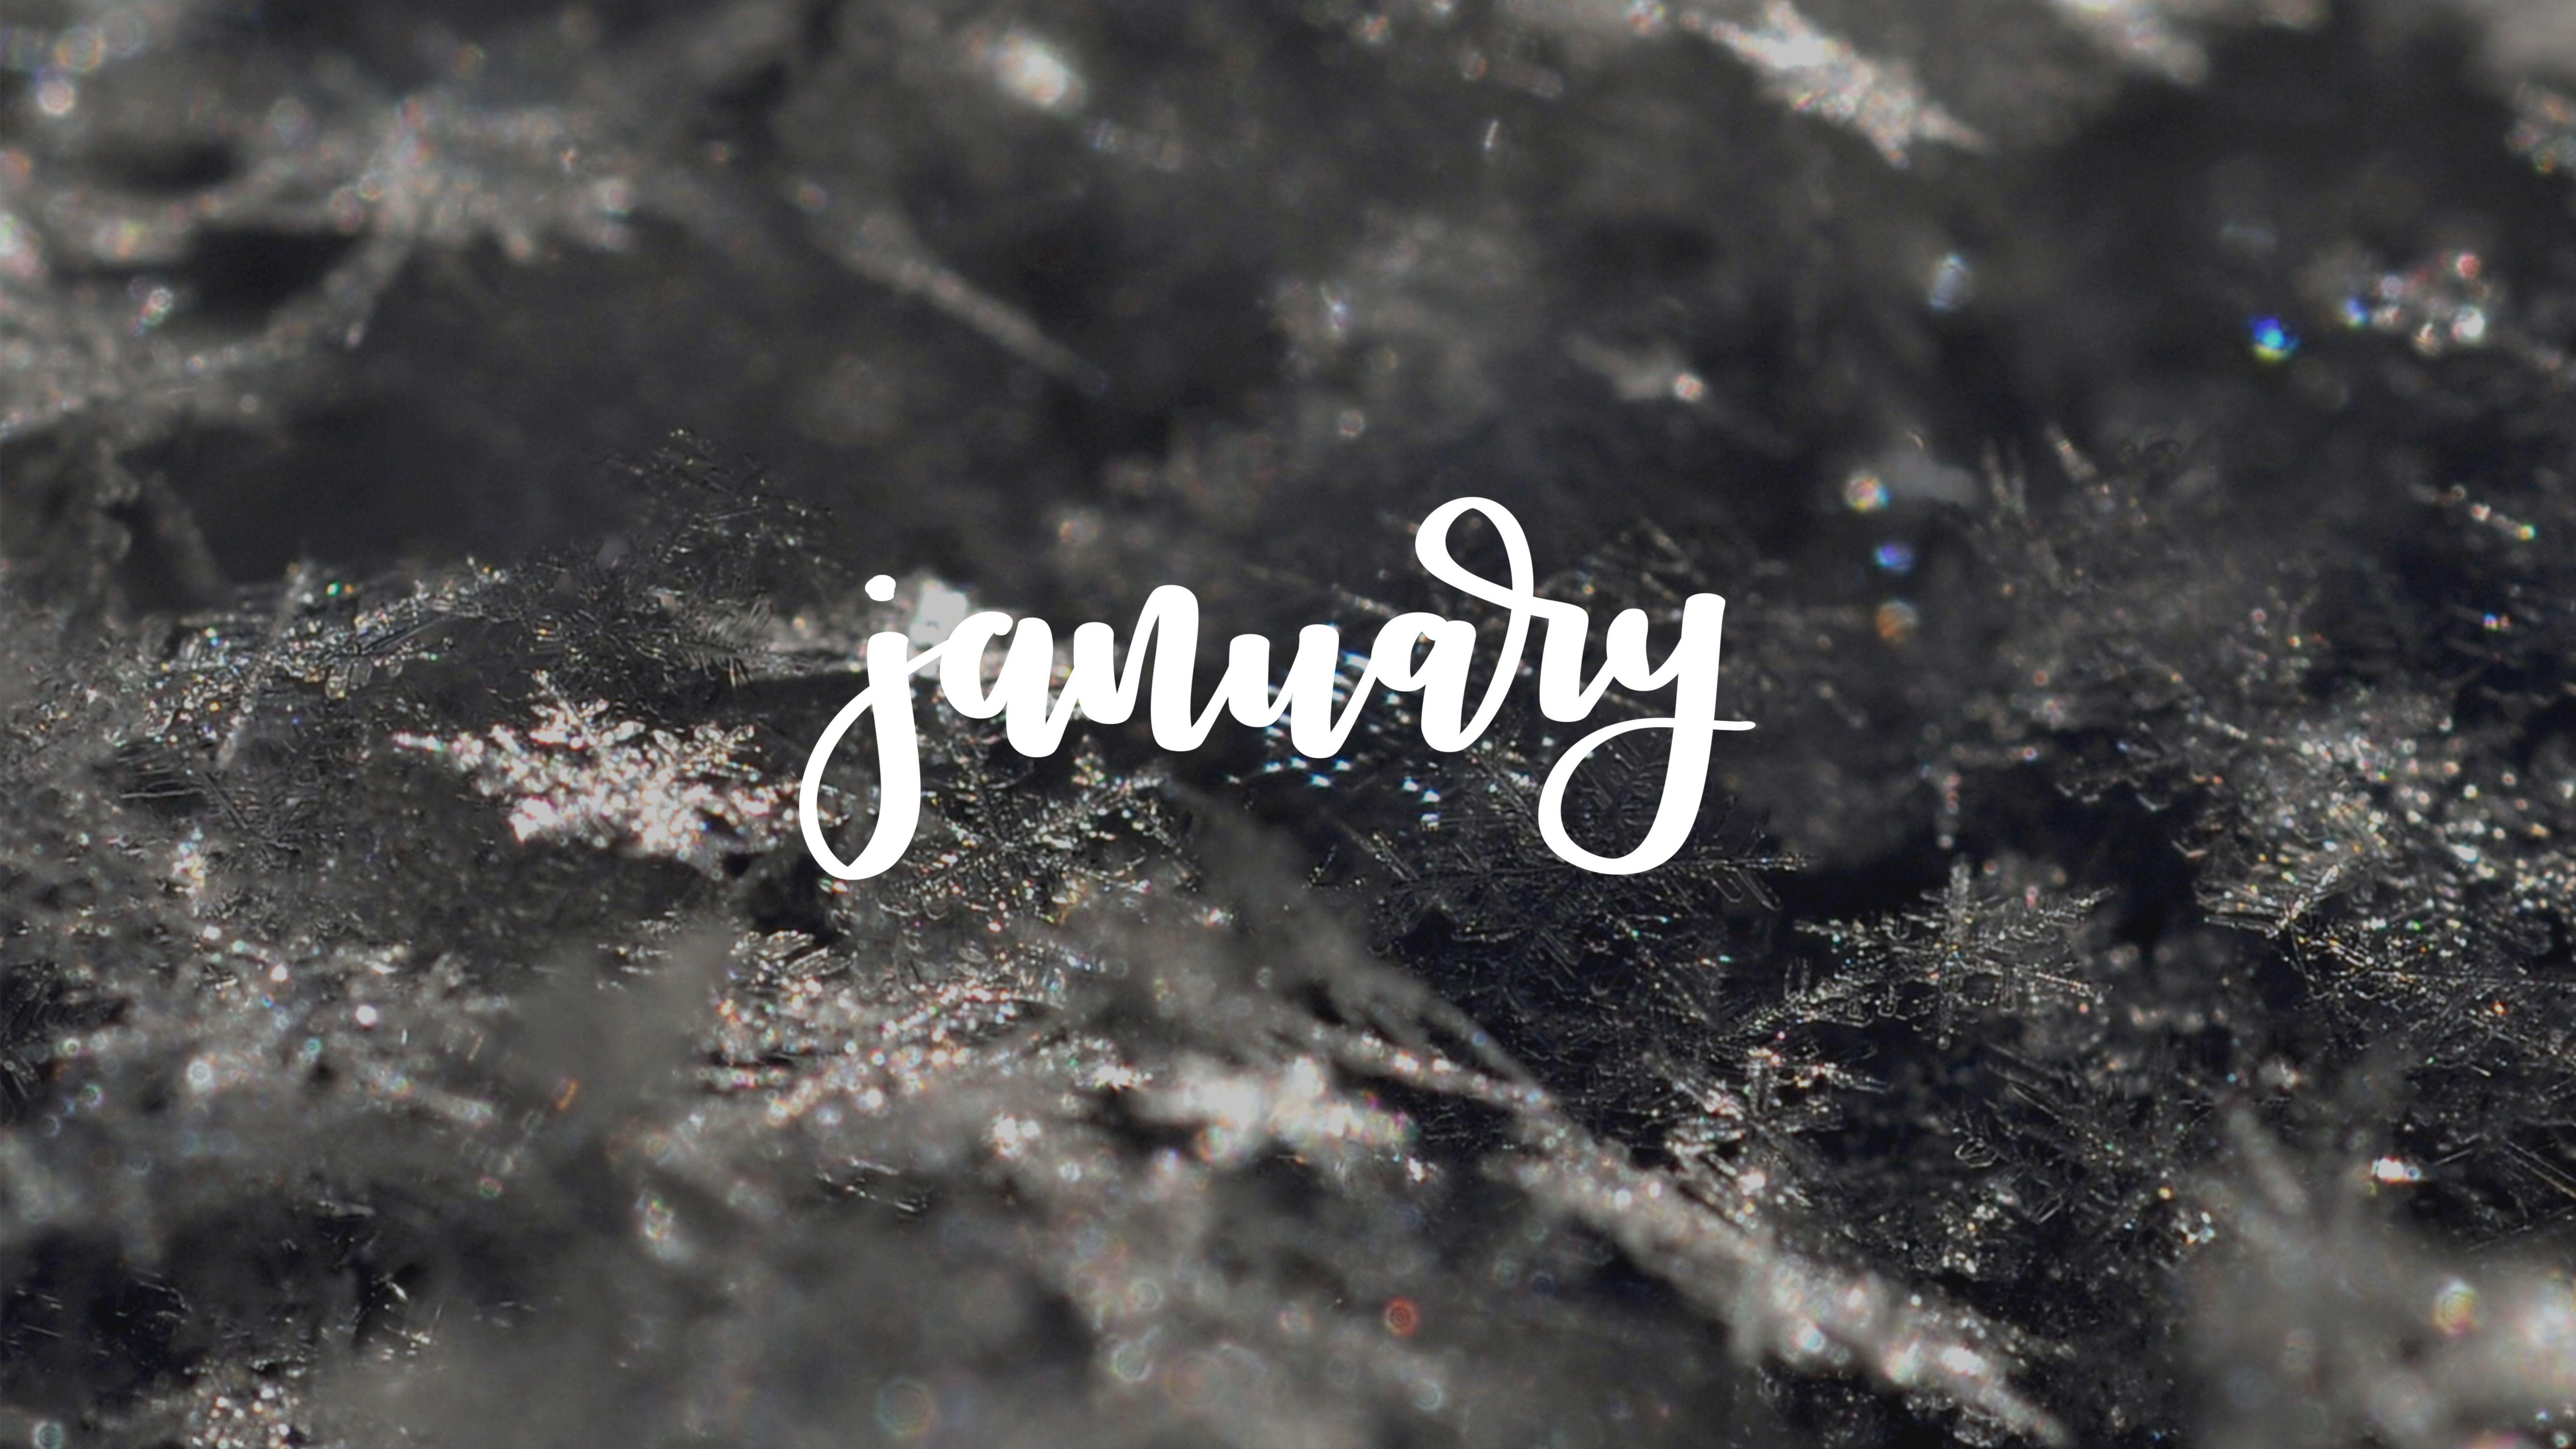 100 Best January wallpaper ideas  january wallpaper wallpaper months in  a year